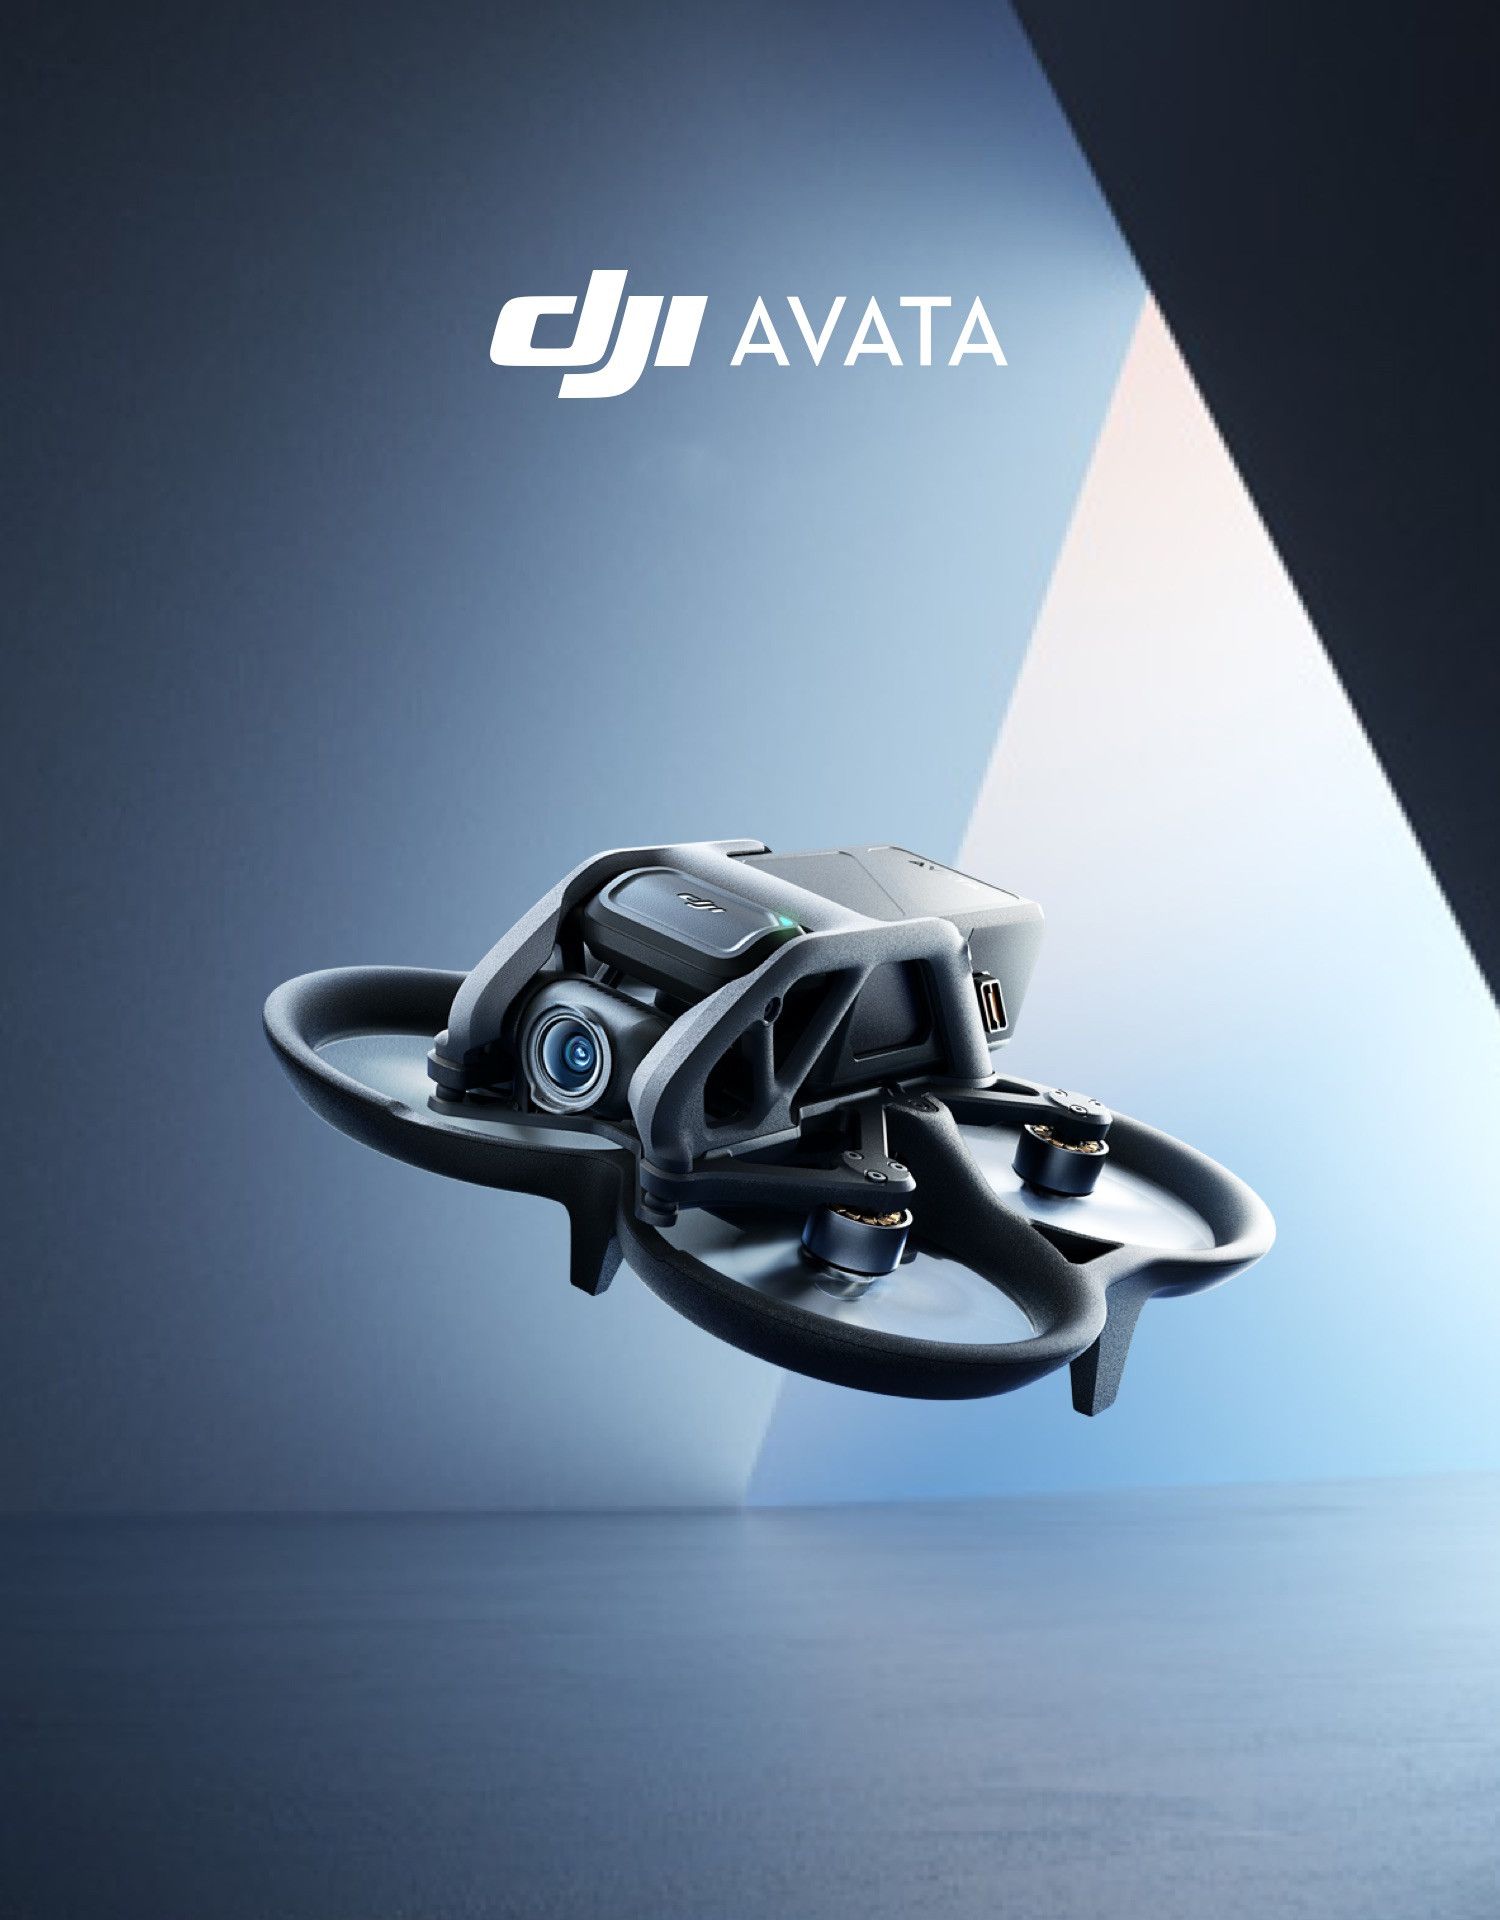 Dji avata fly. DJI Avata Fly Smart Combo. DJI Avata Fly Smart Combo, с очками DJI FPV Goggles v2, контроллером движения. DJ Avata дрон. DJI Avata Pro-view Combo.